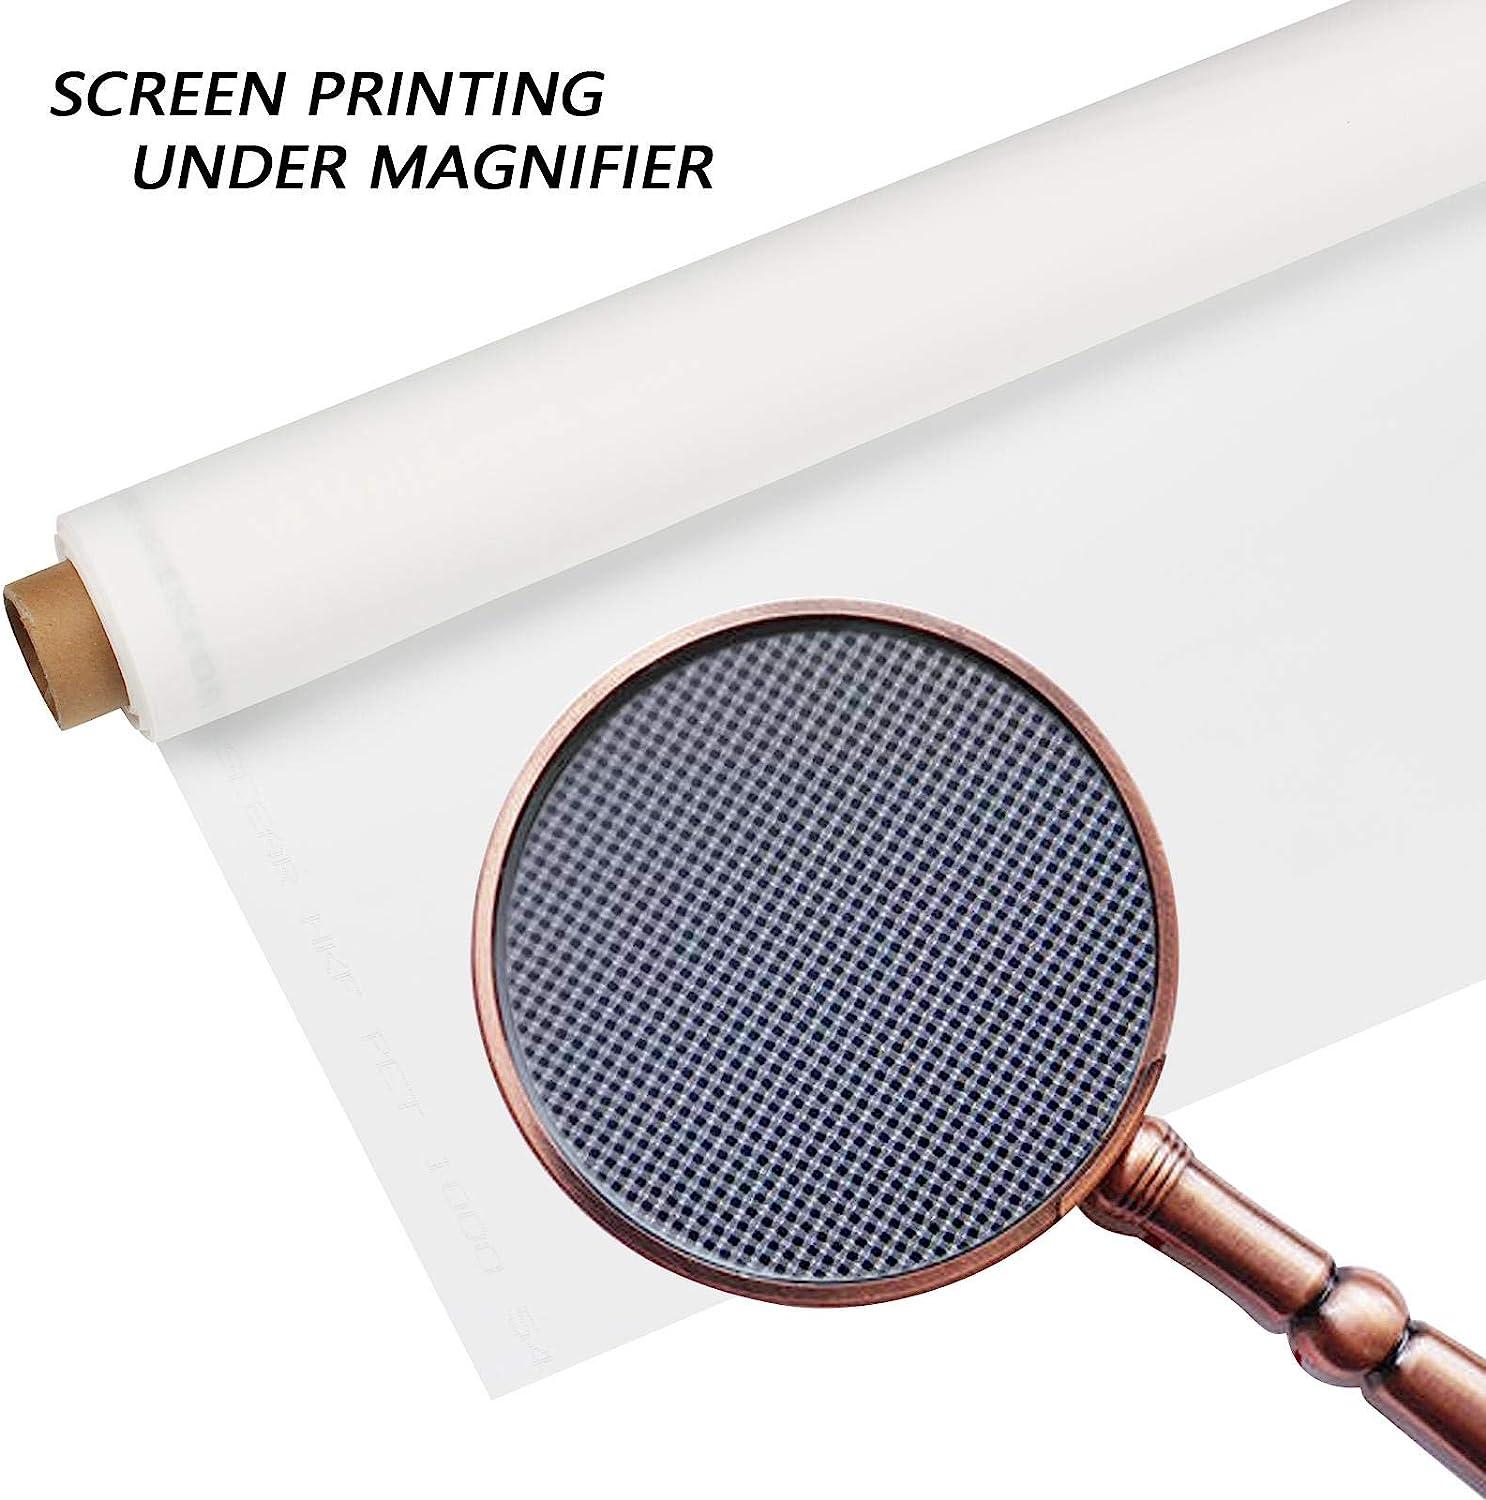 Screen printing mesh fabric